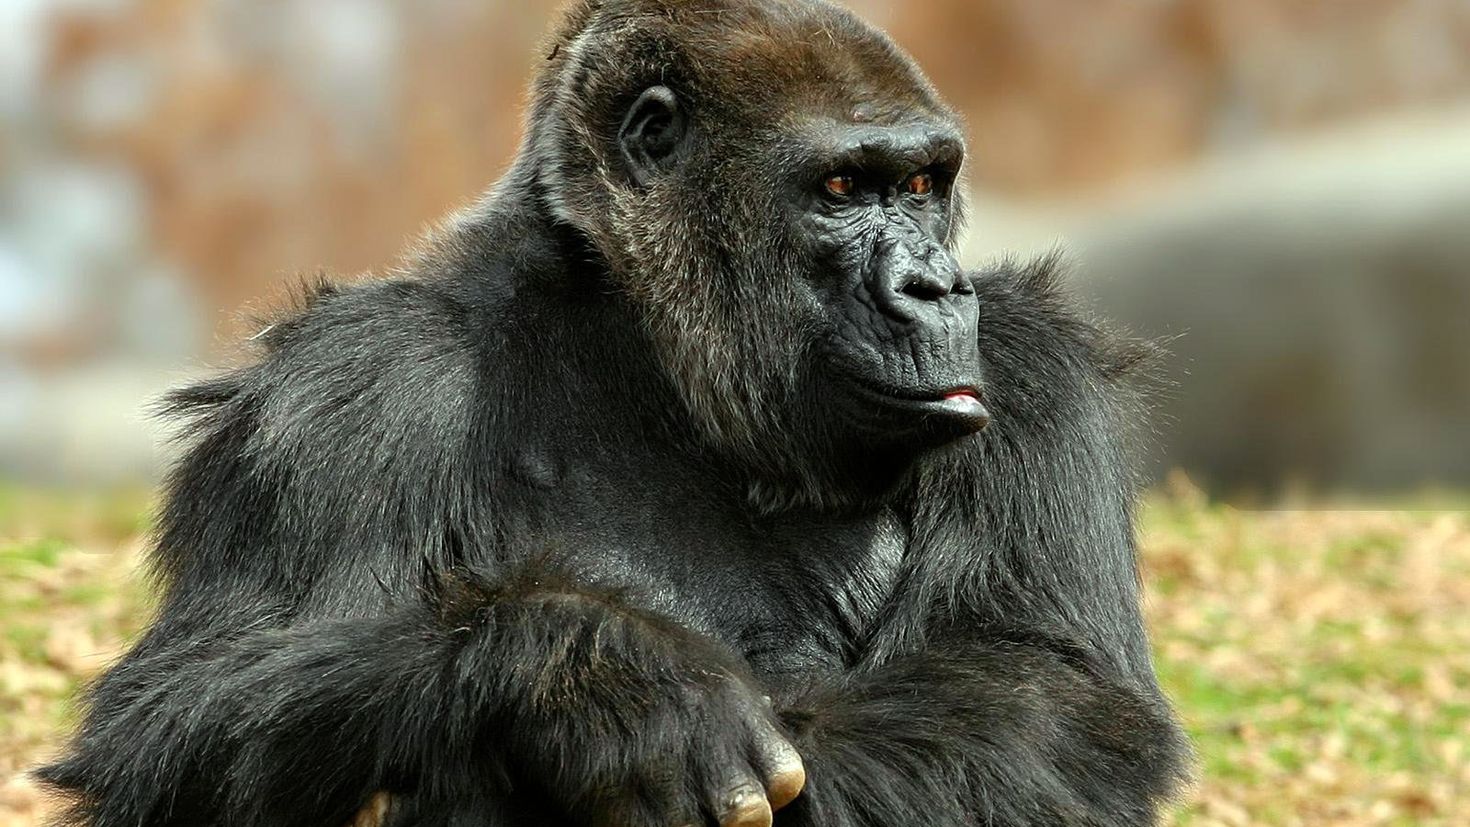 Gorilla animal. Обезьяна горилла. Горилла и шимпанзе. Монки горилла.